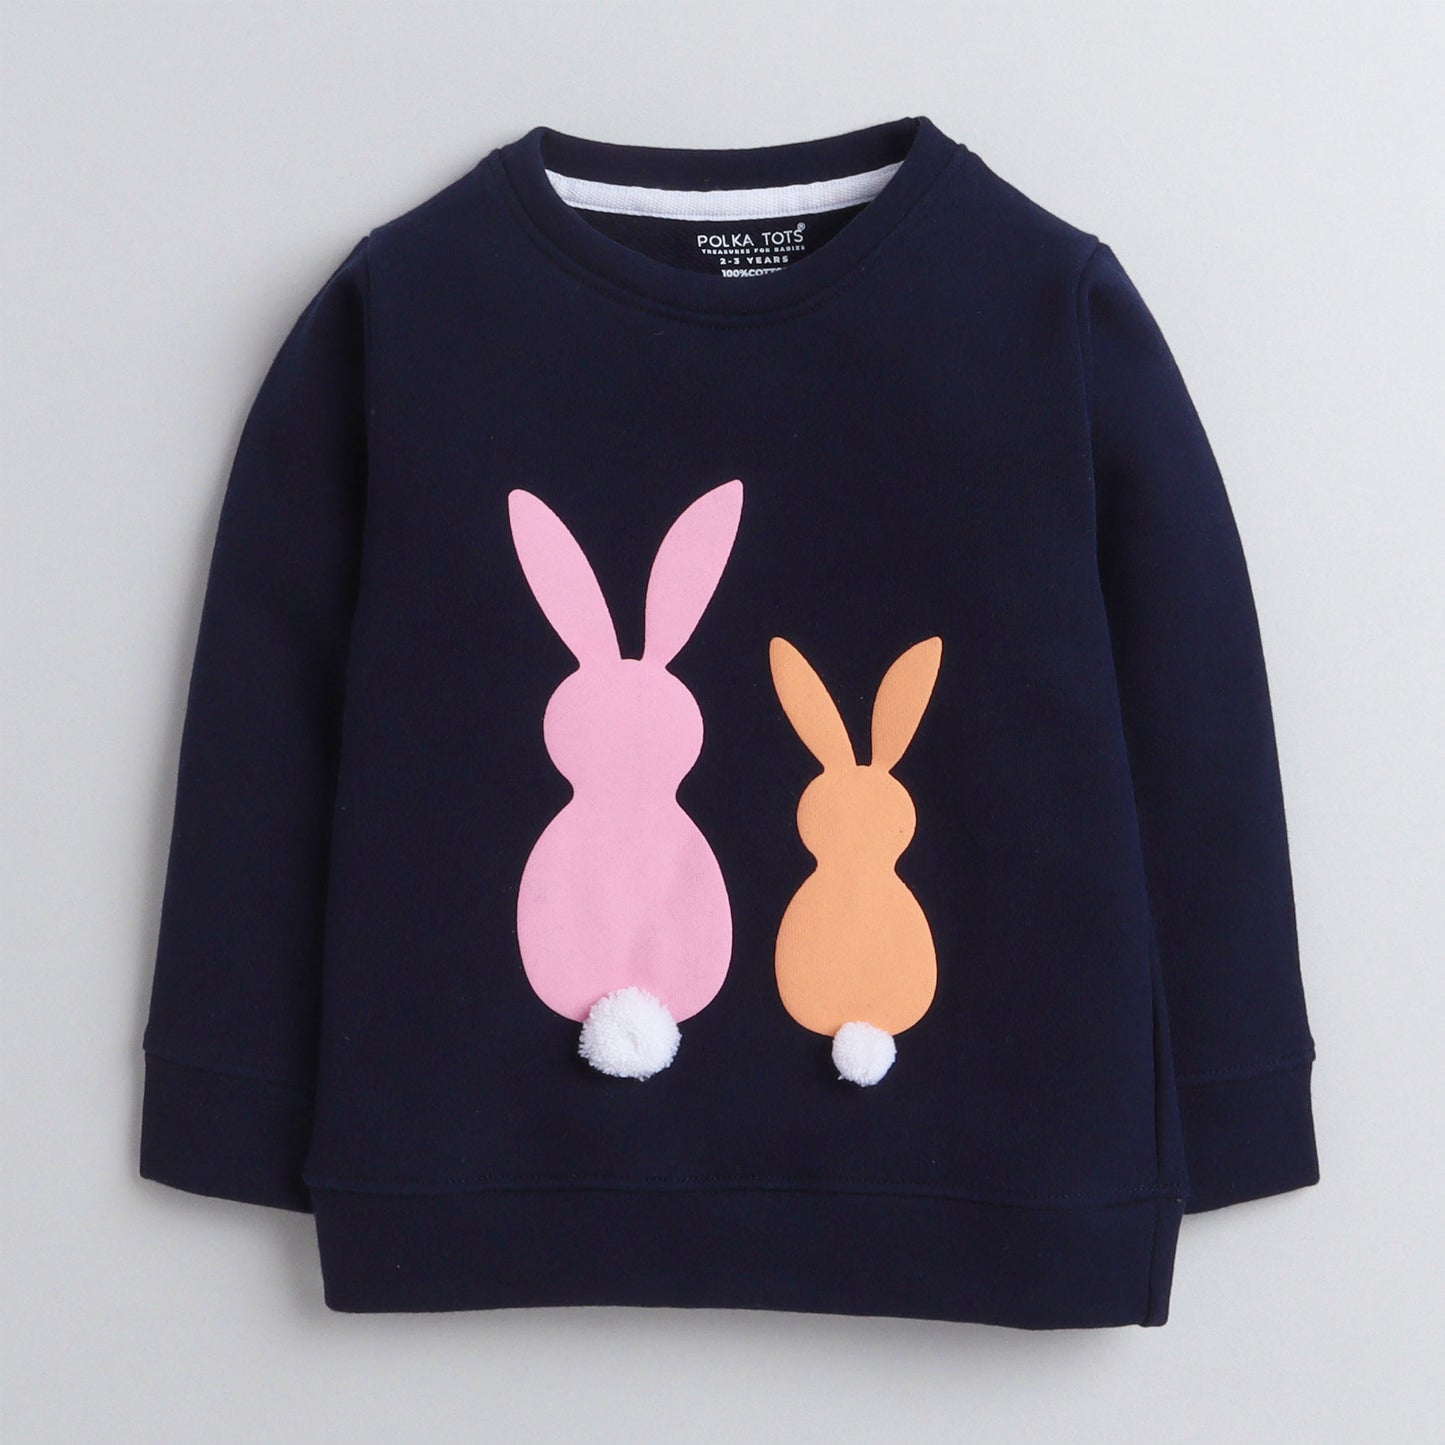 Polka Tots Full Sleeves Sweatshirt Bunny Print with Pom Pom Detail Navy Blue